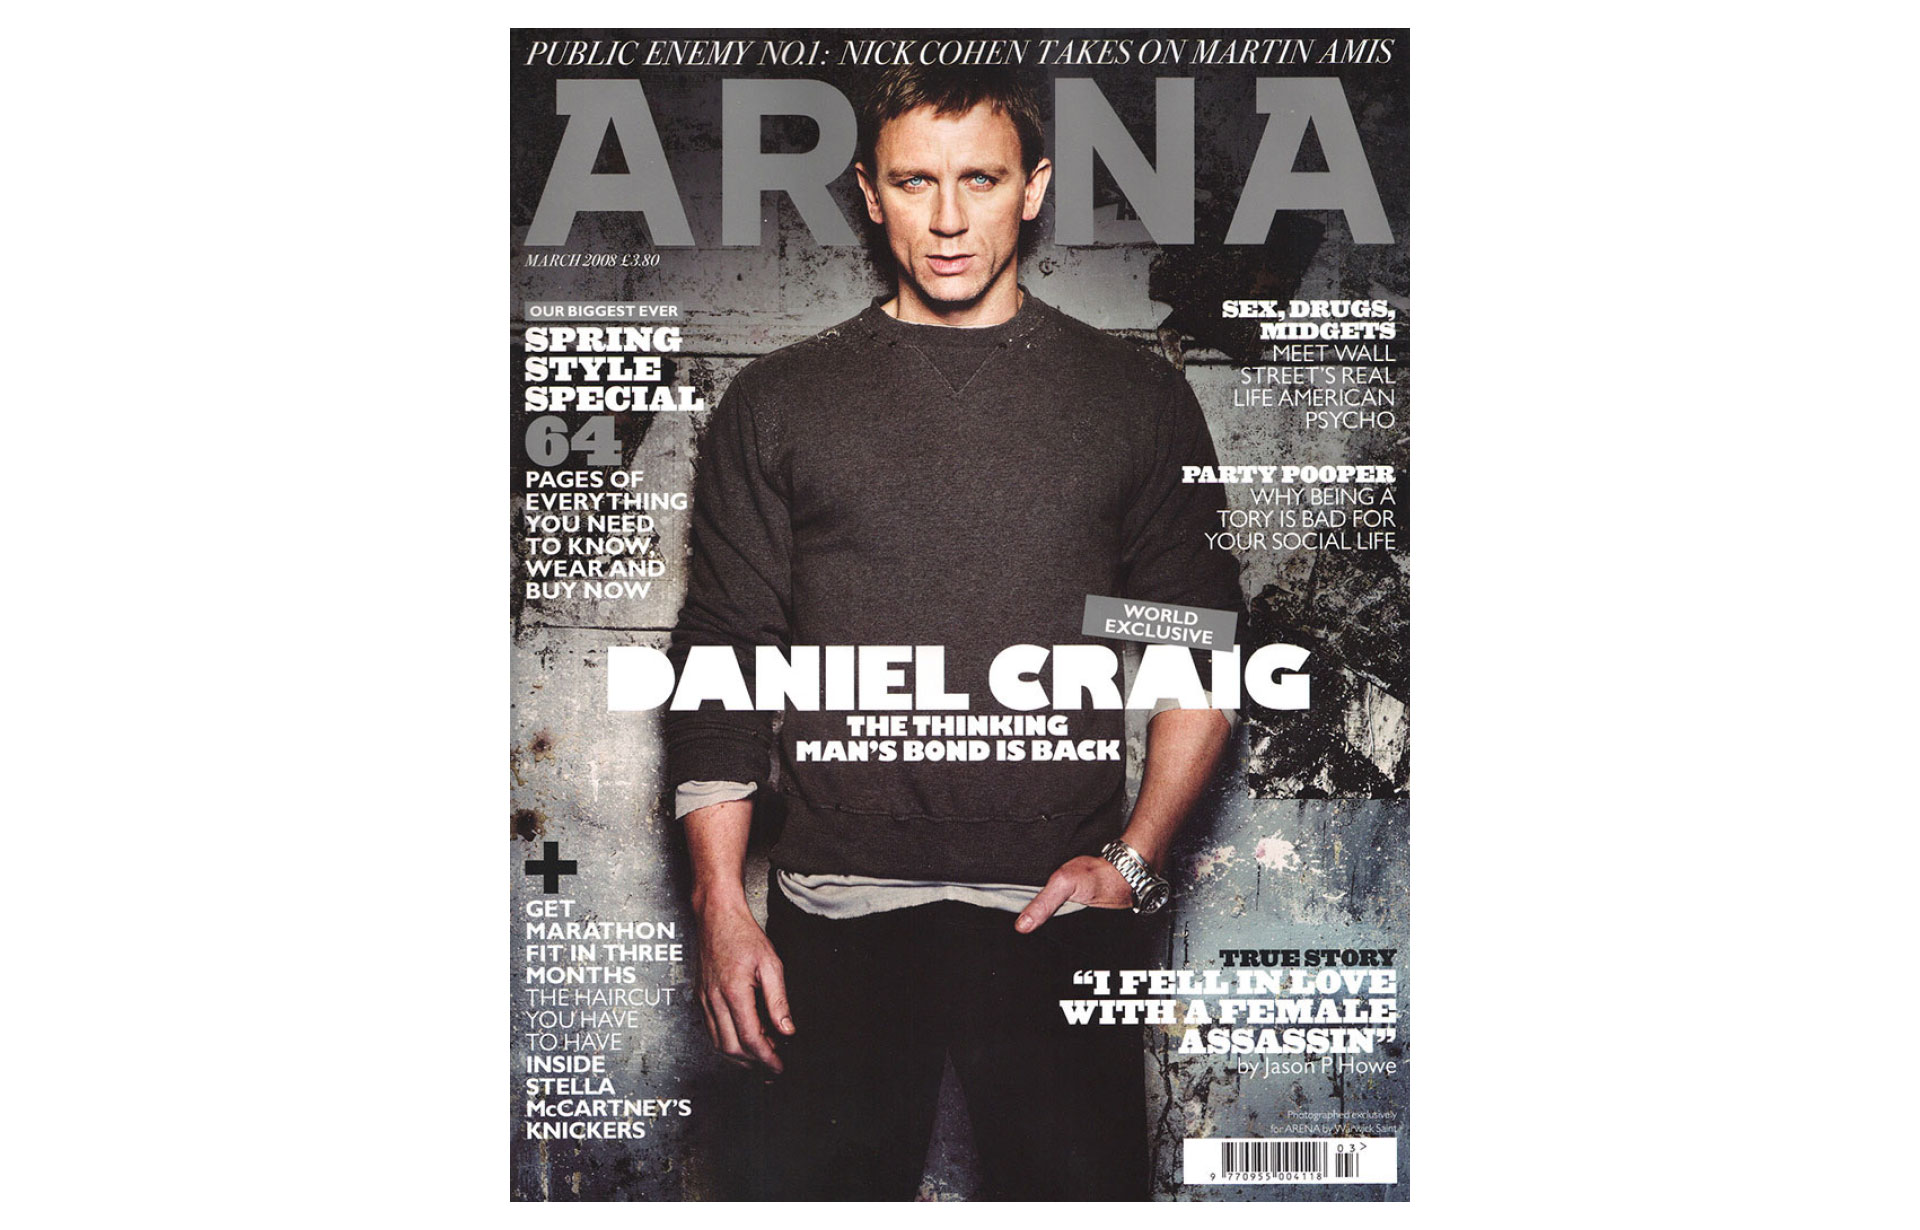 Arena magazine